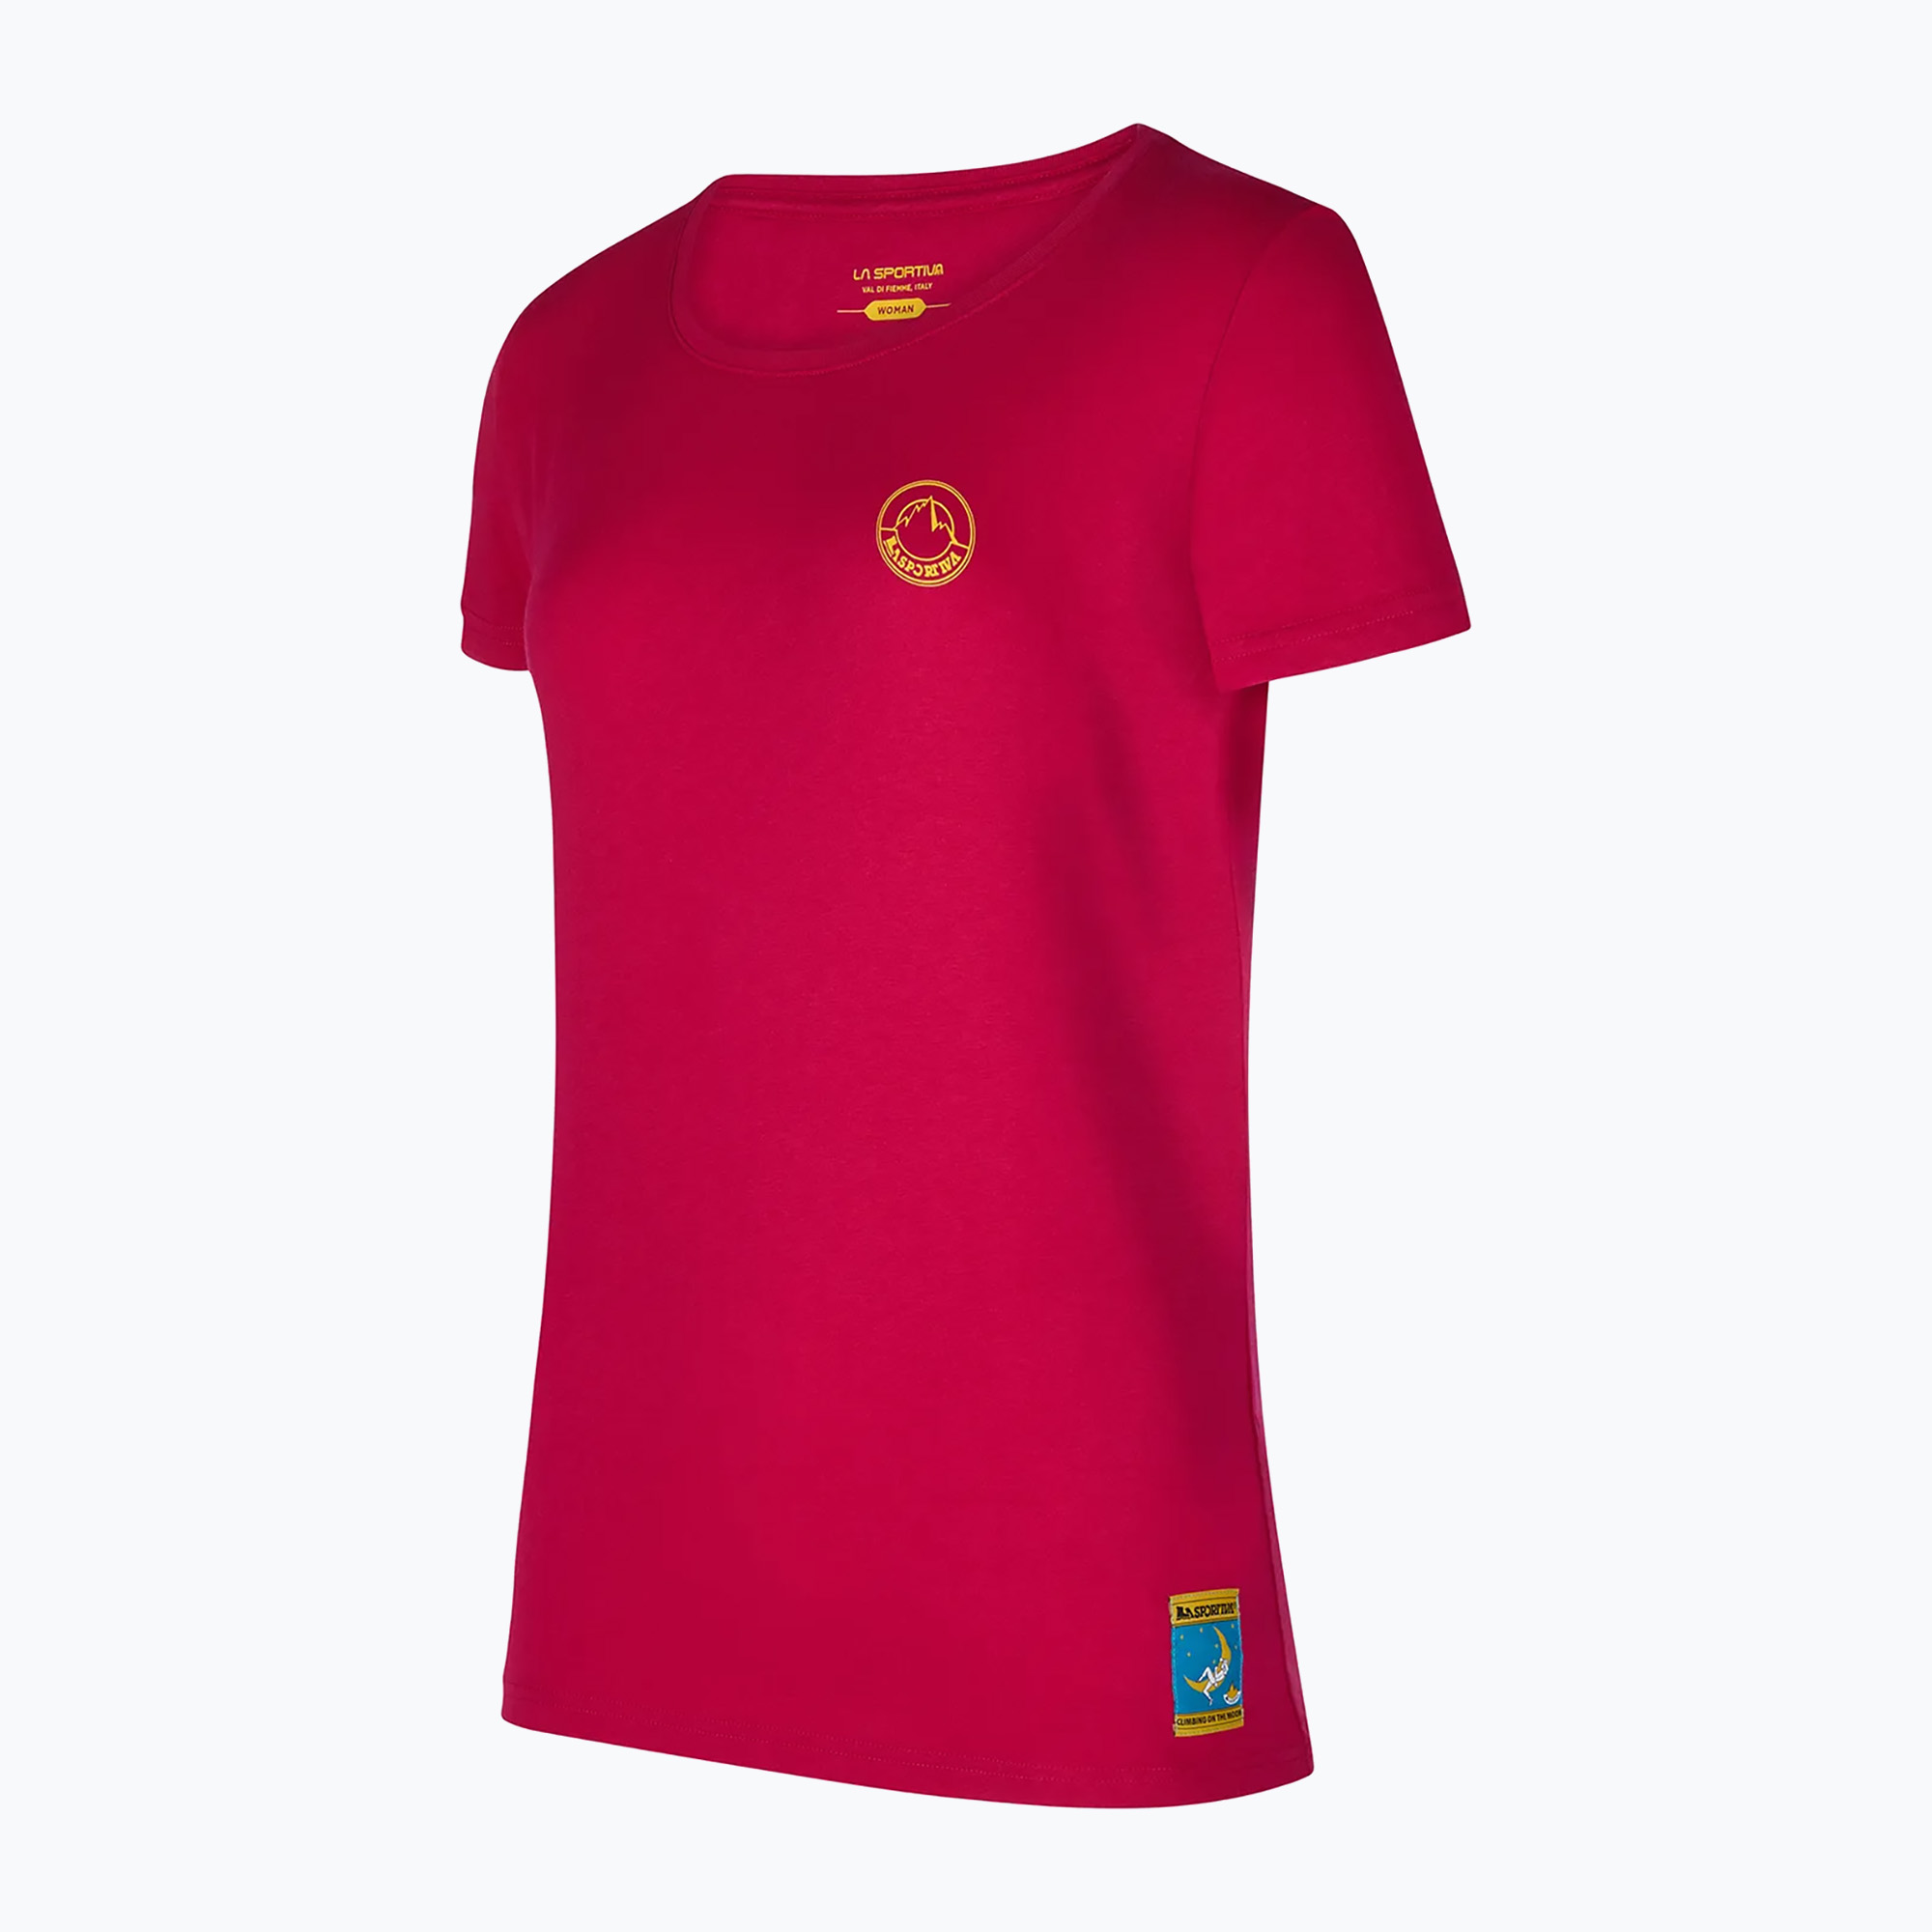 La Sportiva tricou pentru femei Climbing on the Moon fucsia/giallo